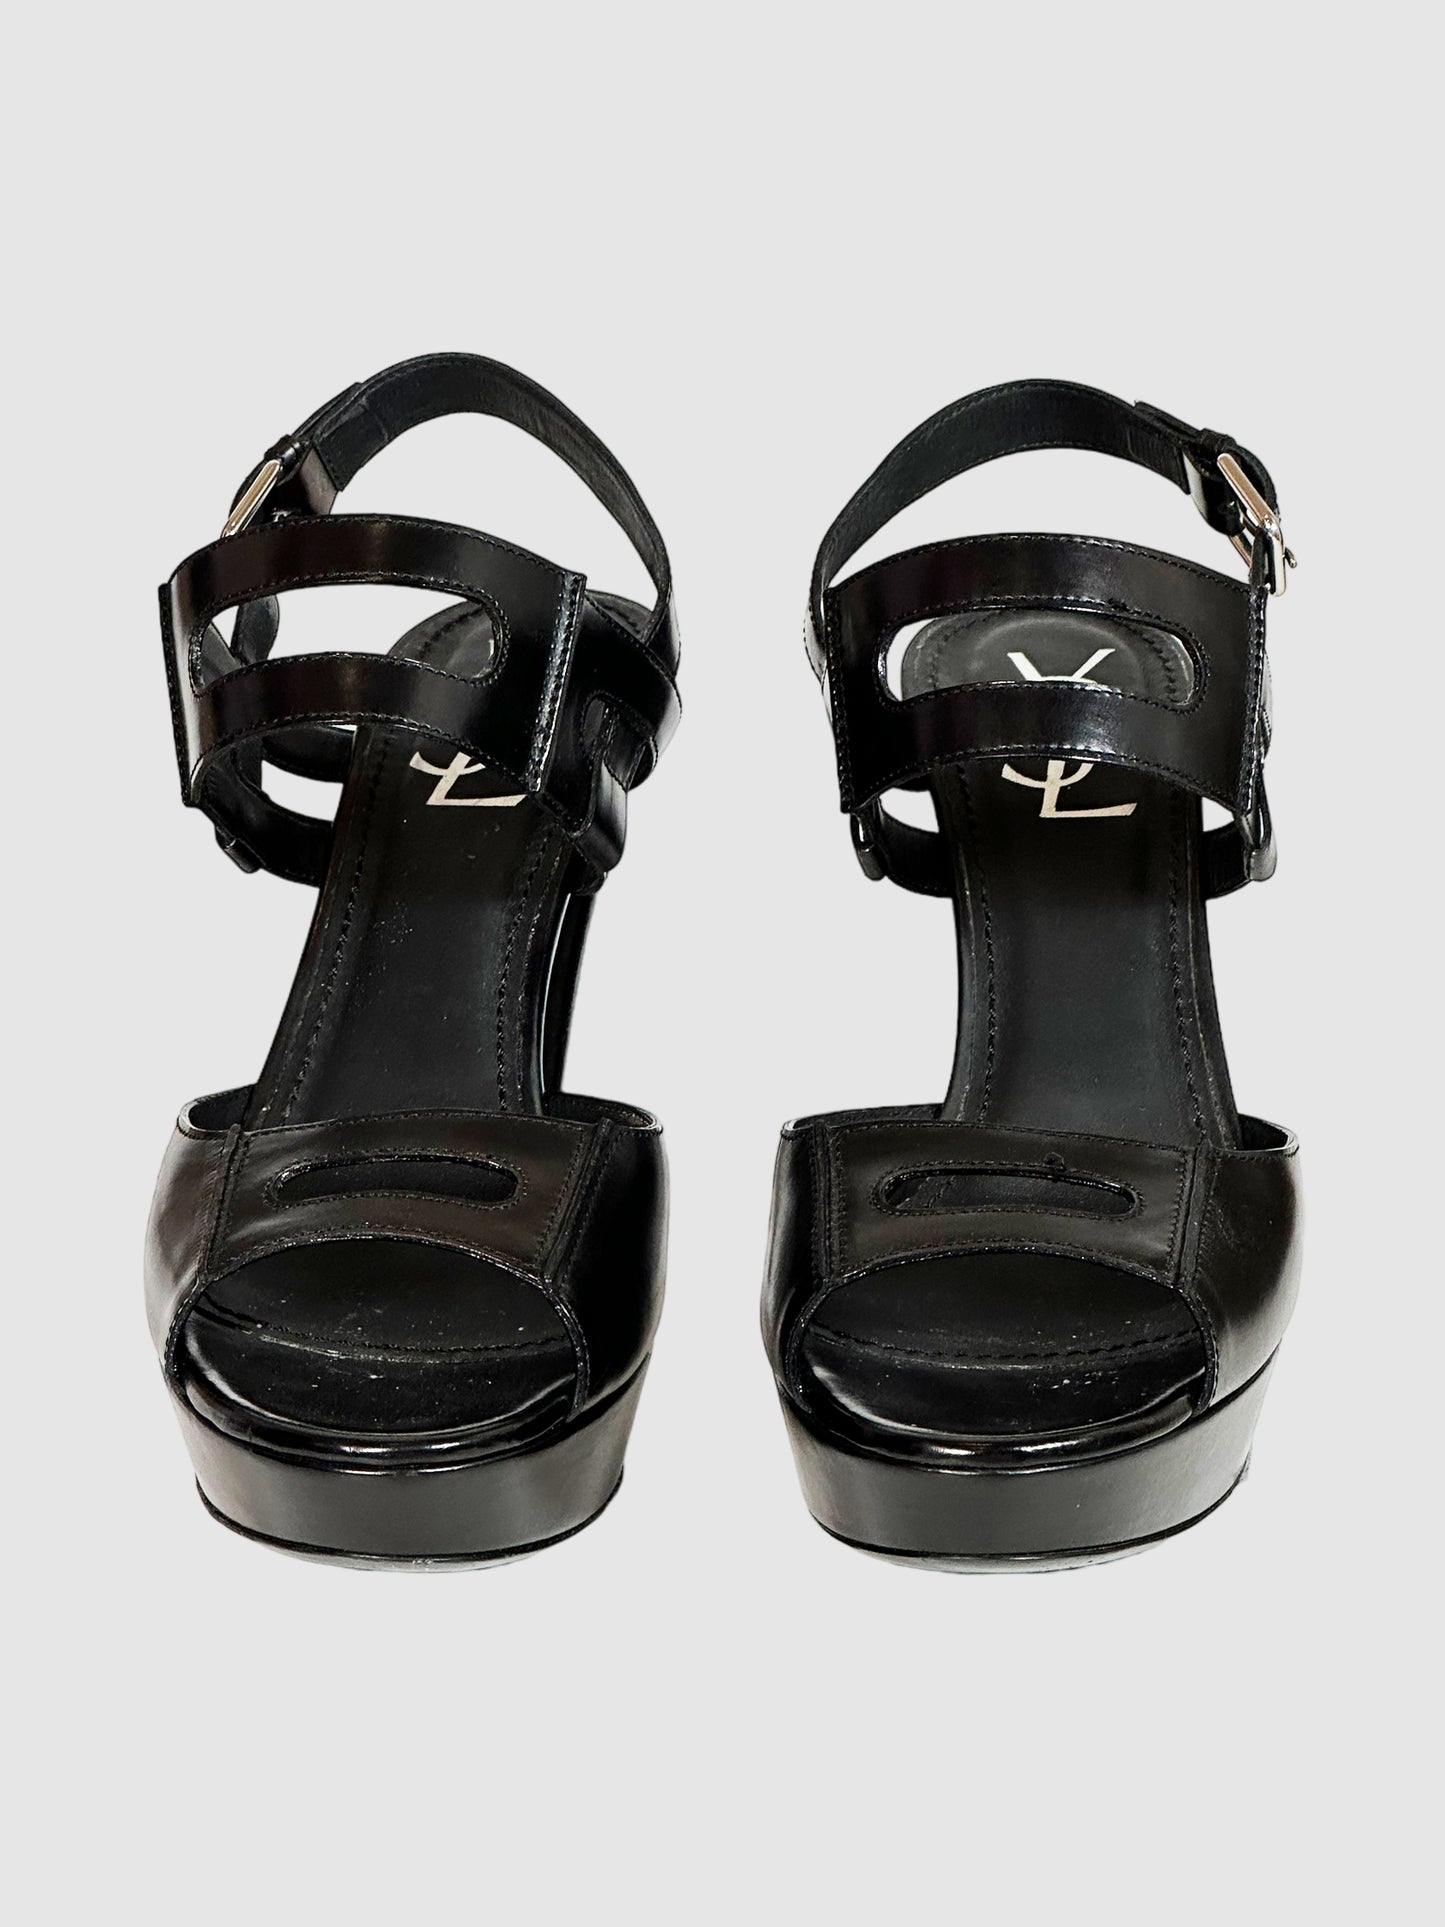 Yves Saint Laurent Leather Slingback Sandals - Size 39